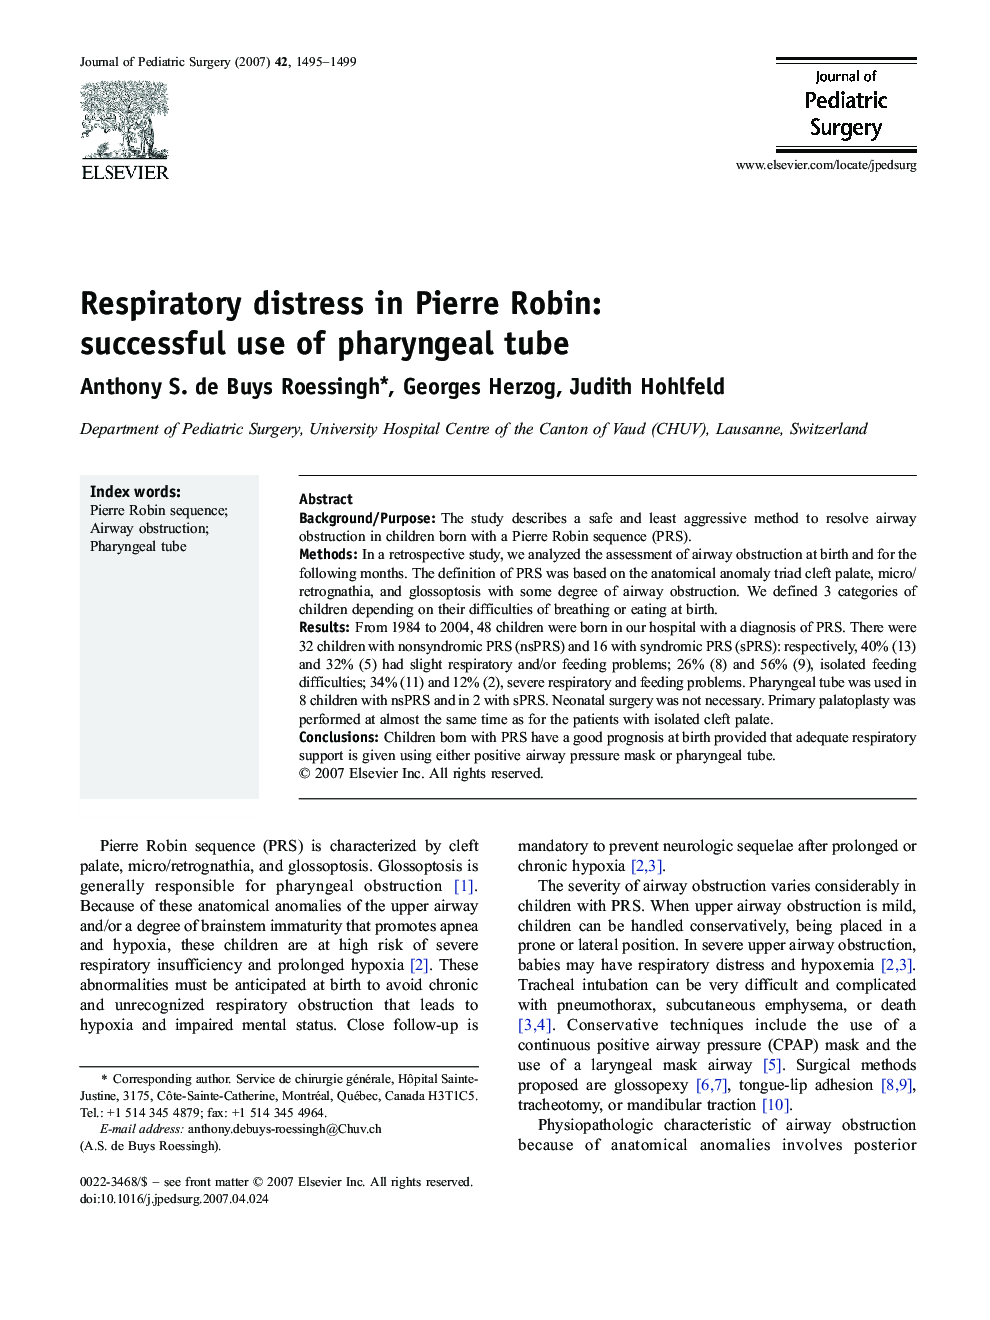 Respiratory distress in Pierre Robin: successful use of pharyngeal tube